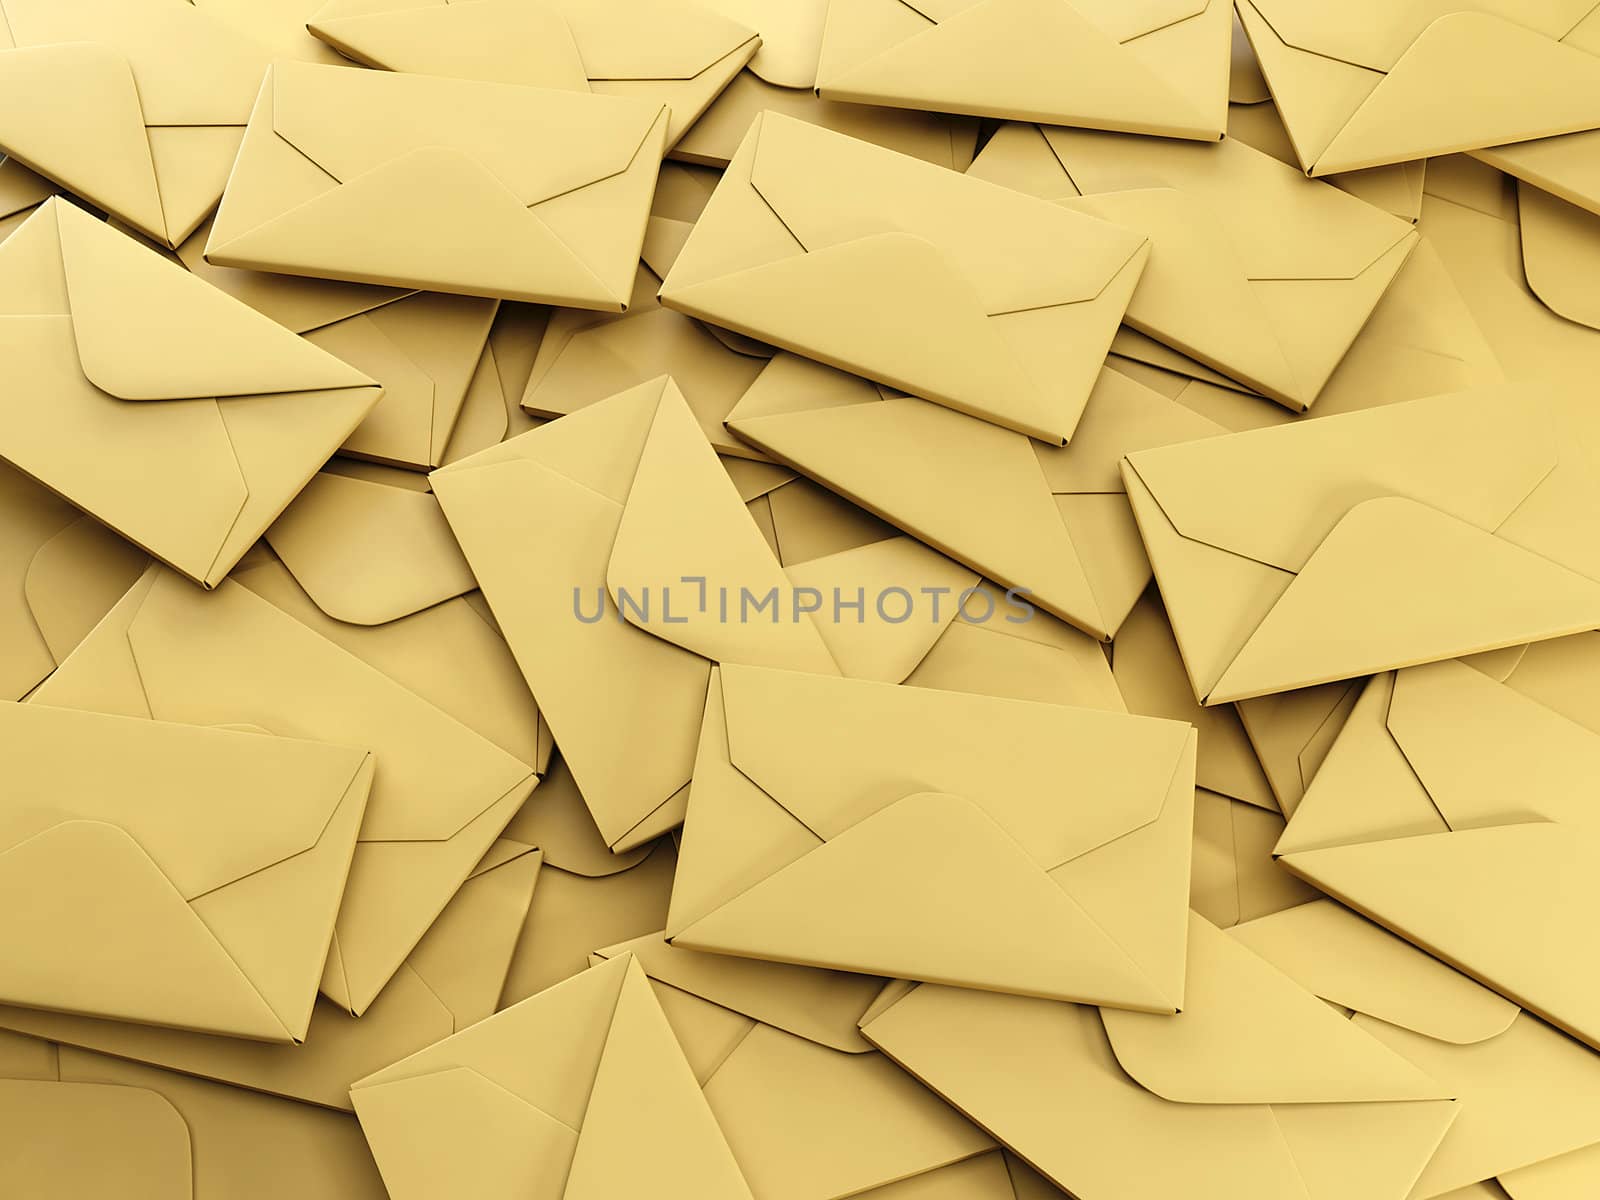 3d illustration: A group of envelopes by kolobsek